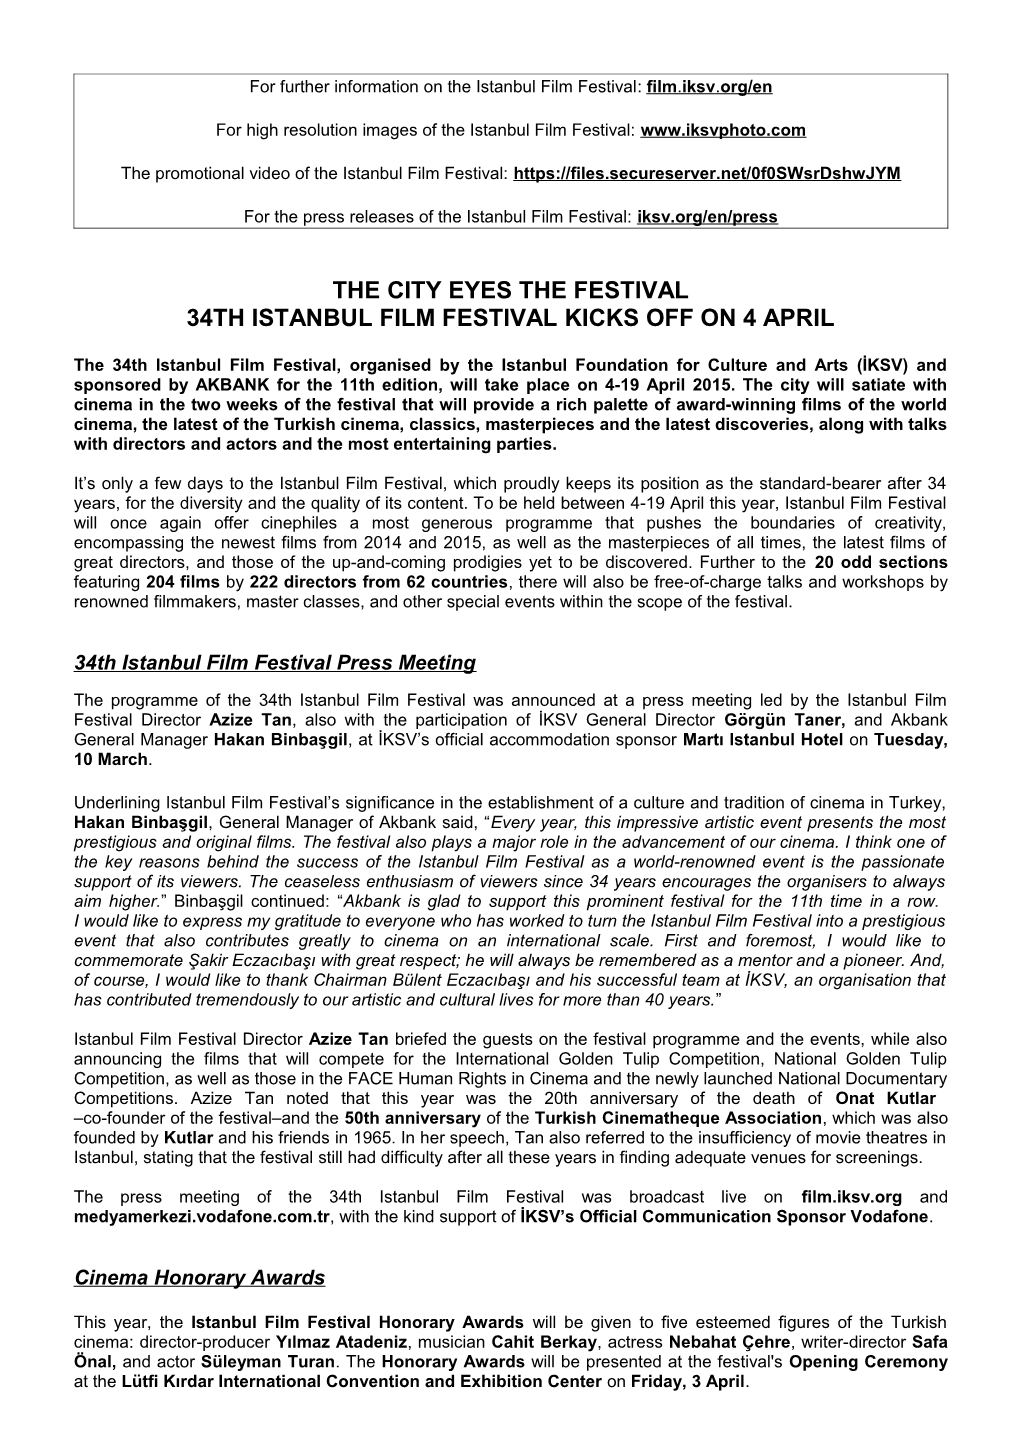 For Further Information on the Istanbul Film Festival: Film.Iksv.Org/En